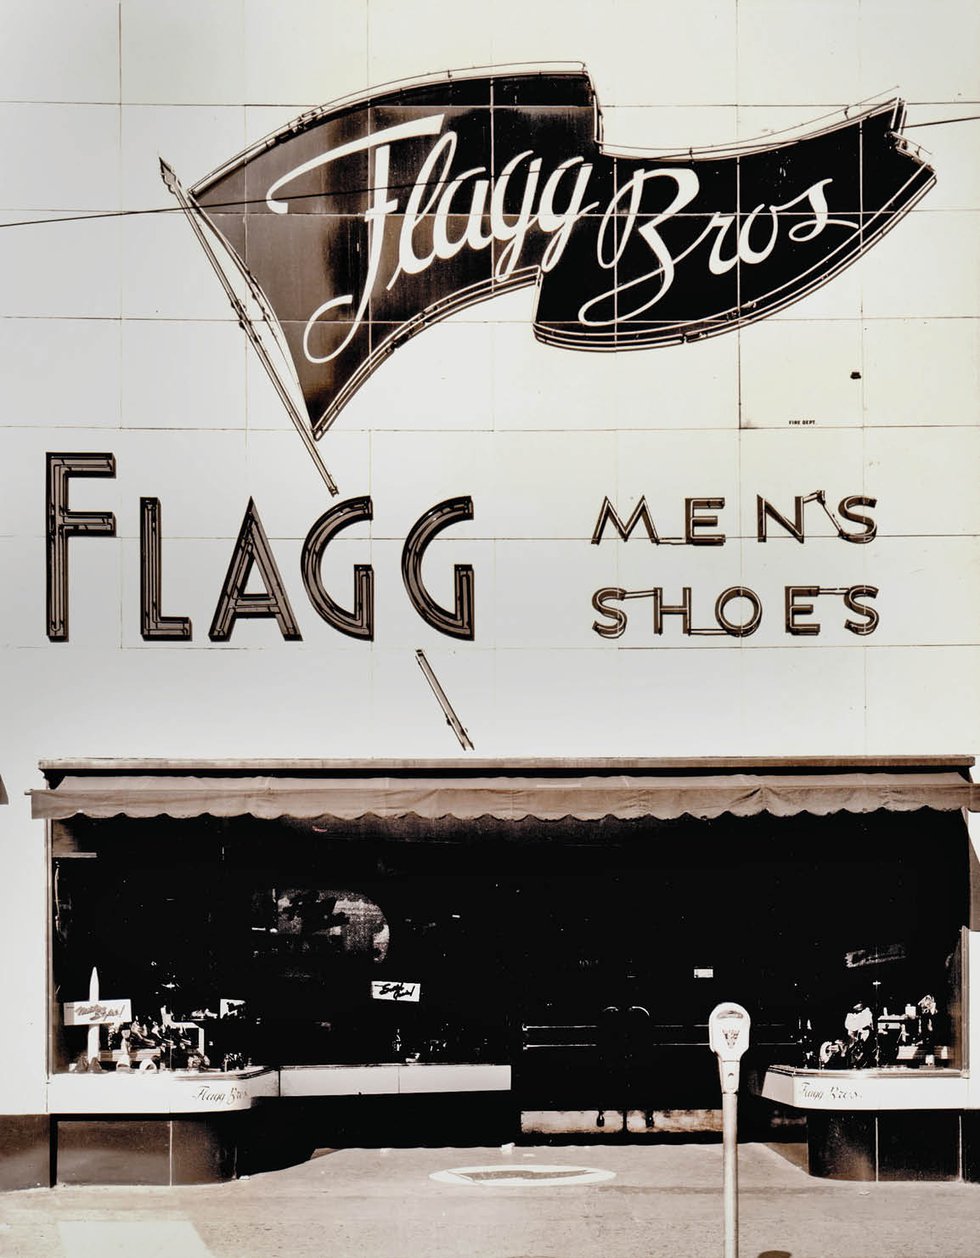 FlaggBrosShoes_cc.jpg